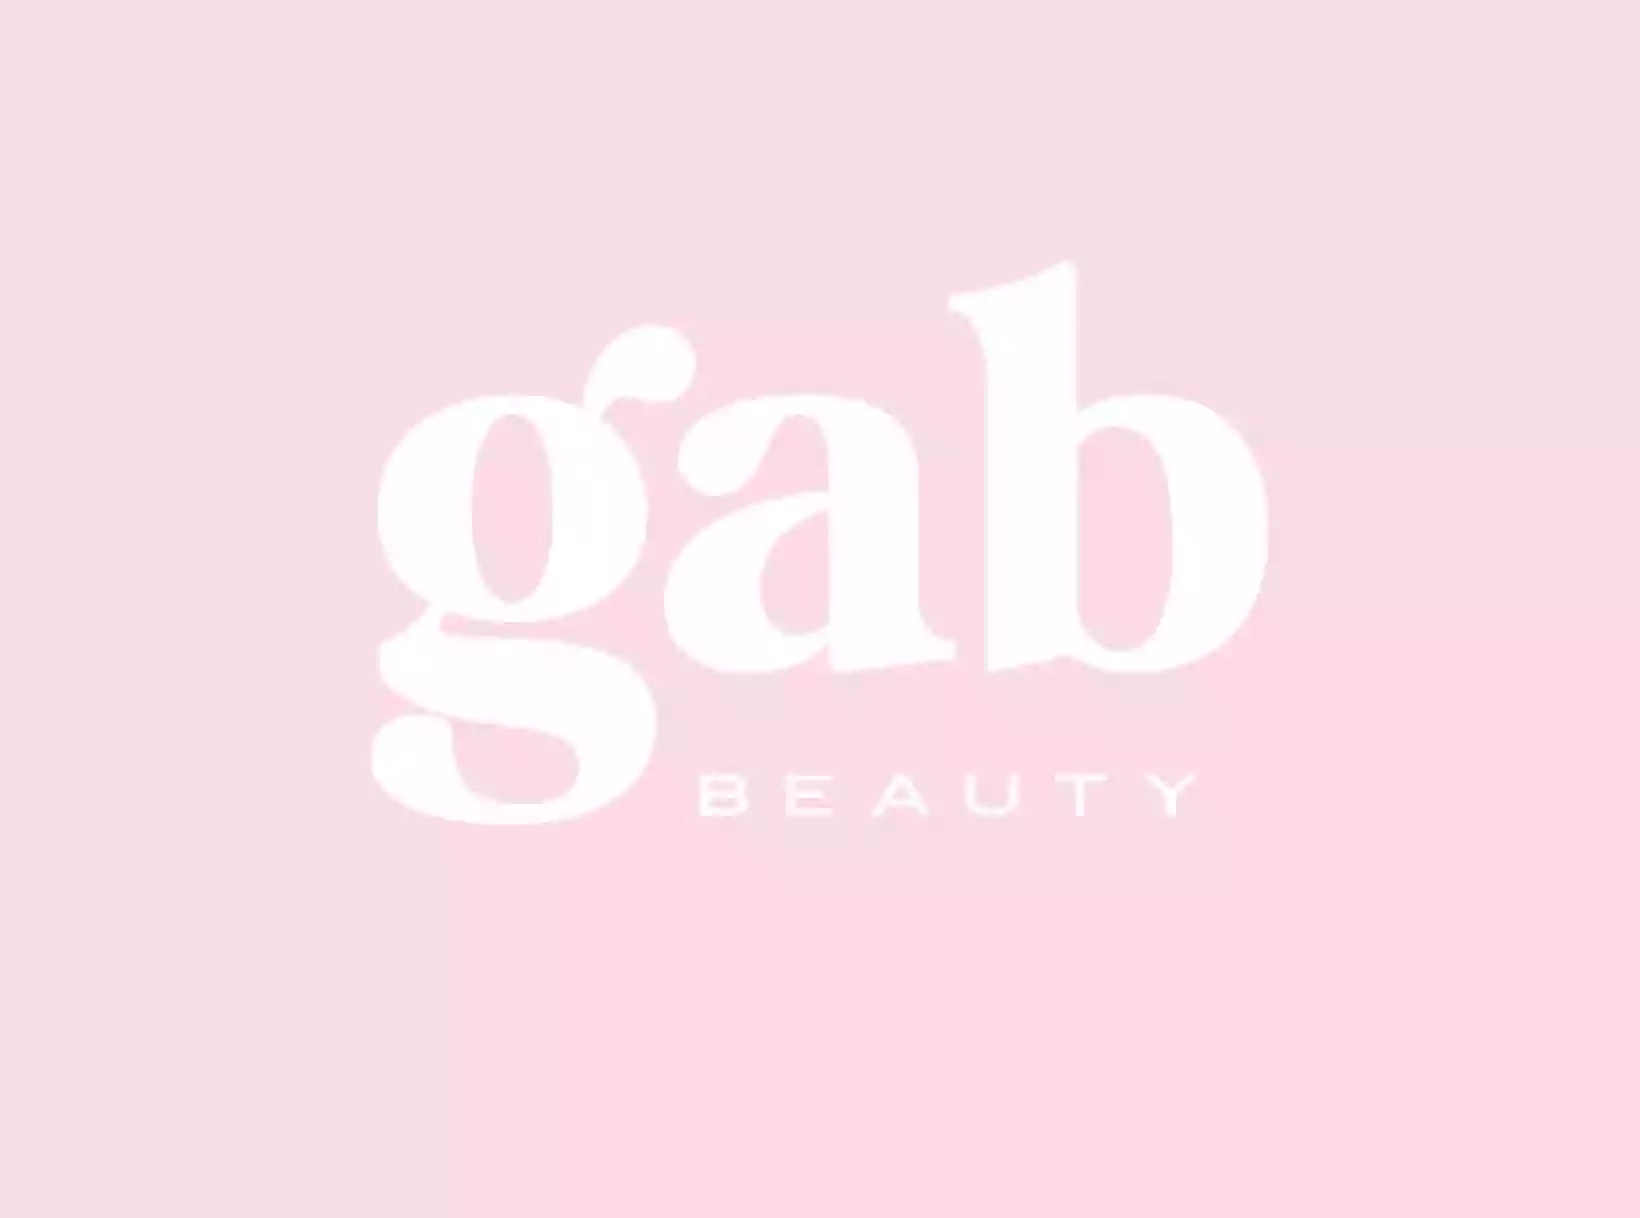 Gab Beauty